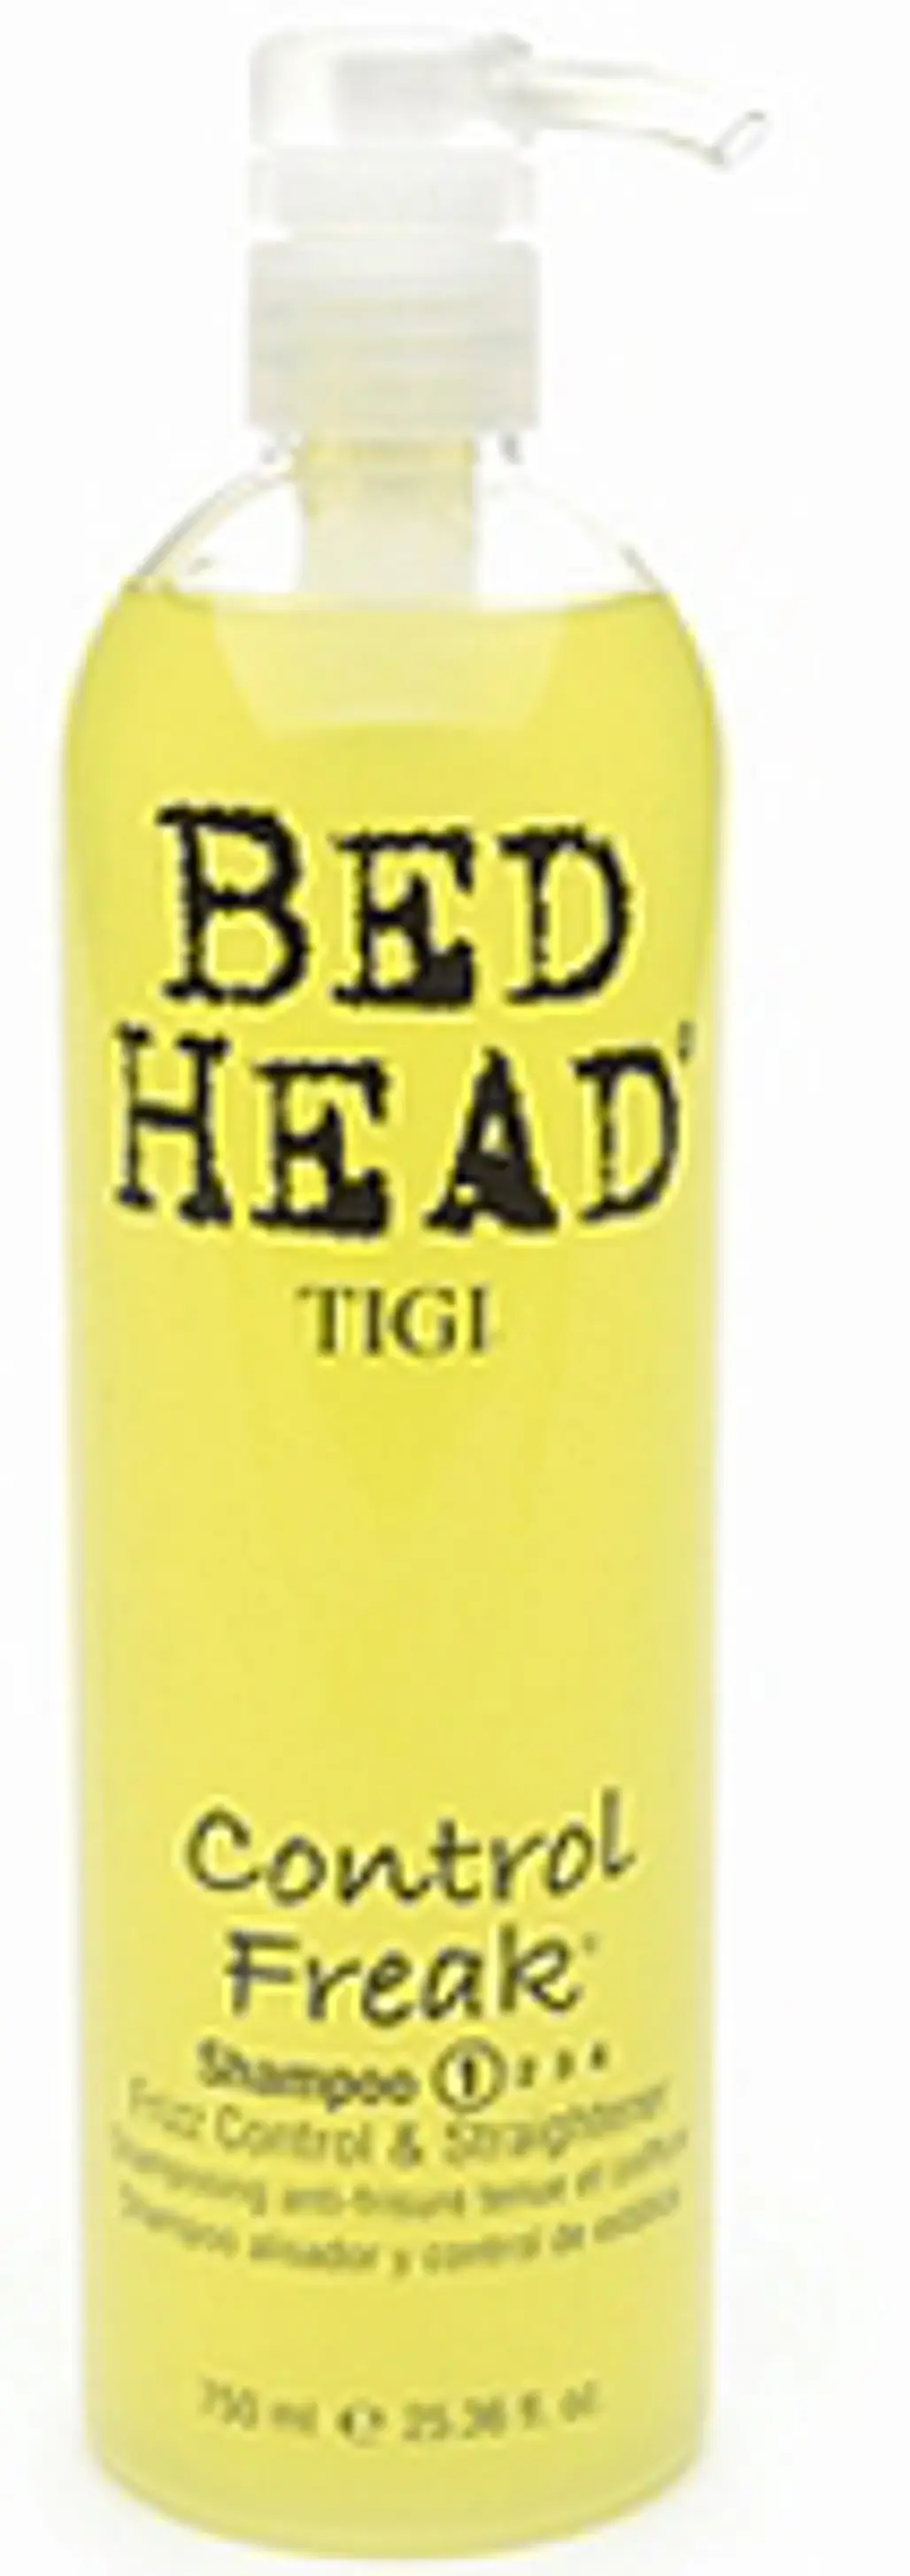 Tigi Bed Head Control Freak Shampoo